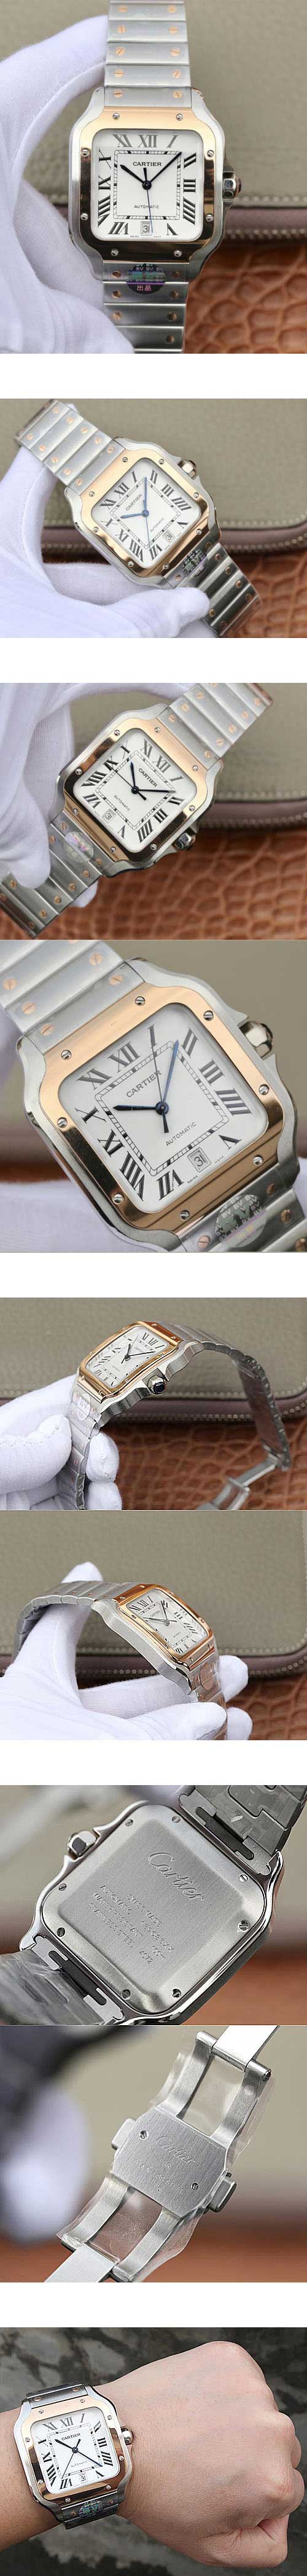 (BV工場)カルティエスーパーコピー時計 サントス ドゥ カルティエ ウォッチ LM W2SA0006